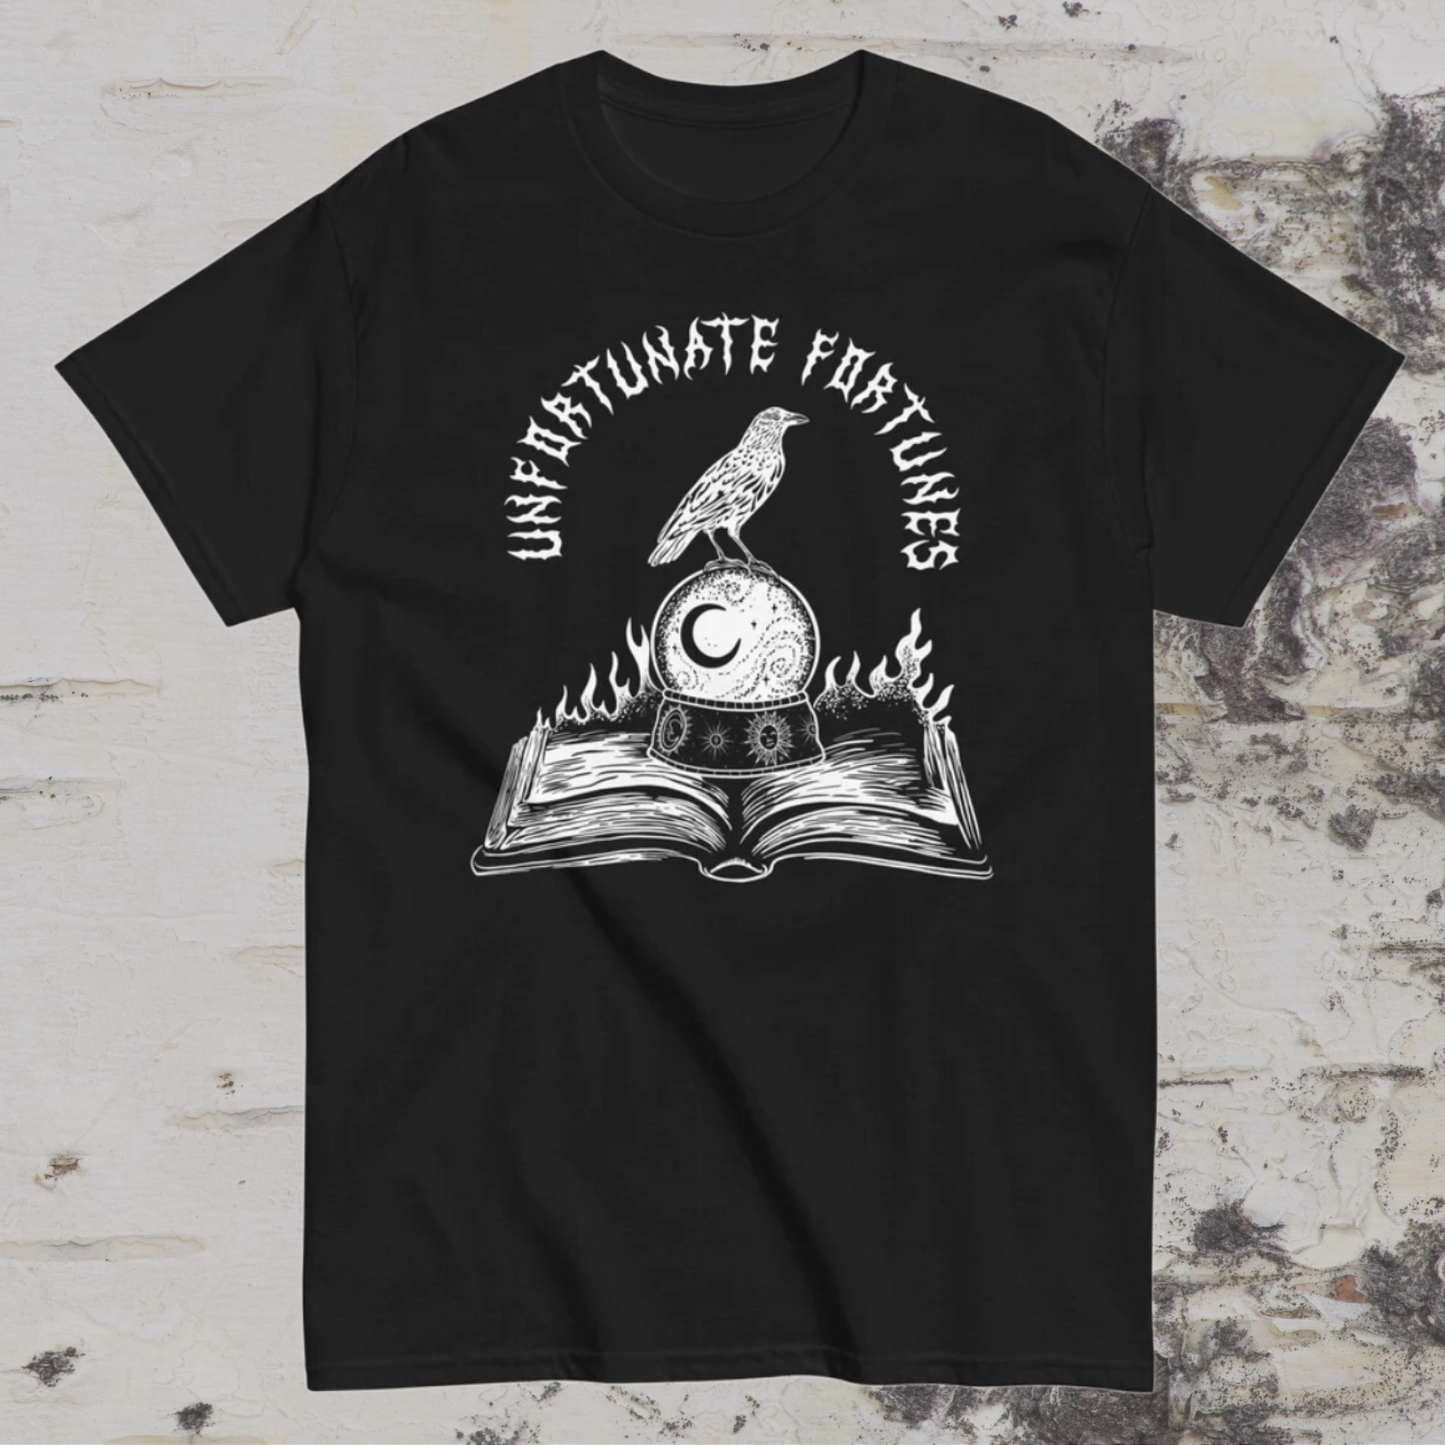 'Unfortunate Fortunes' Black Death Metal T-Shirt